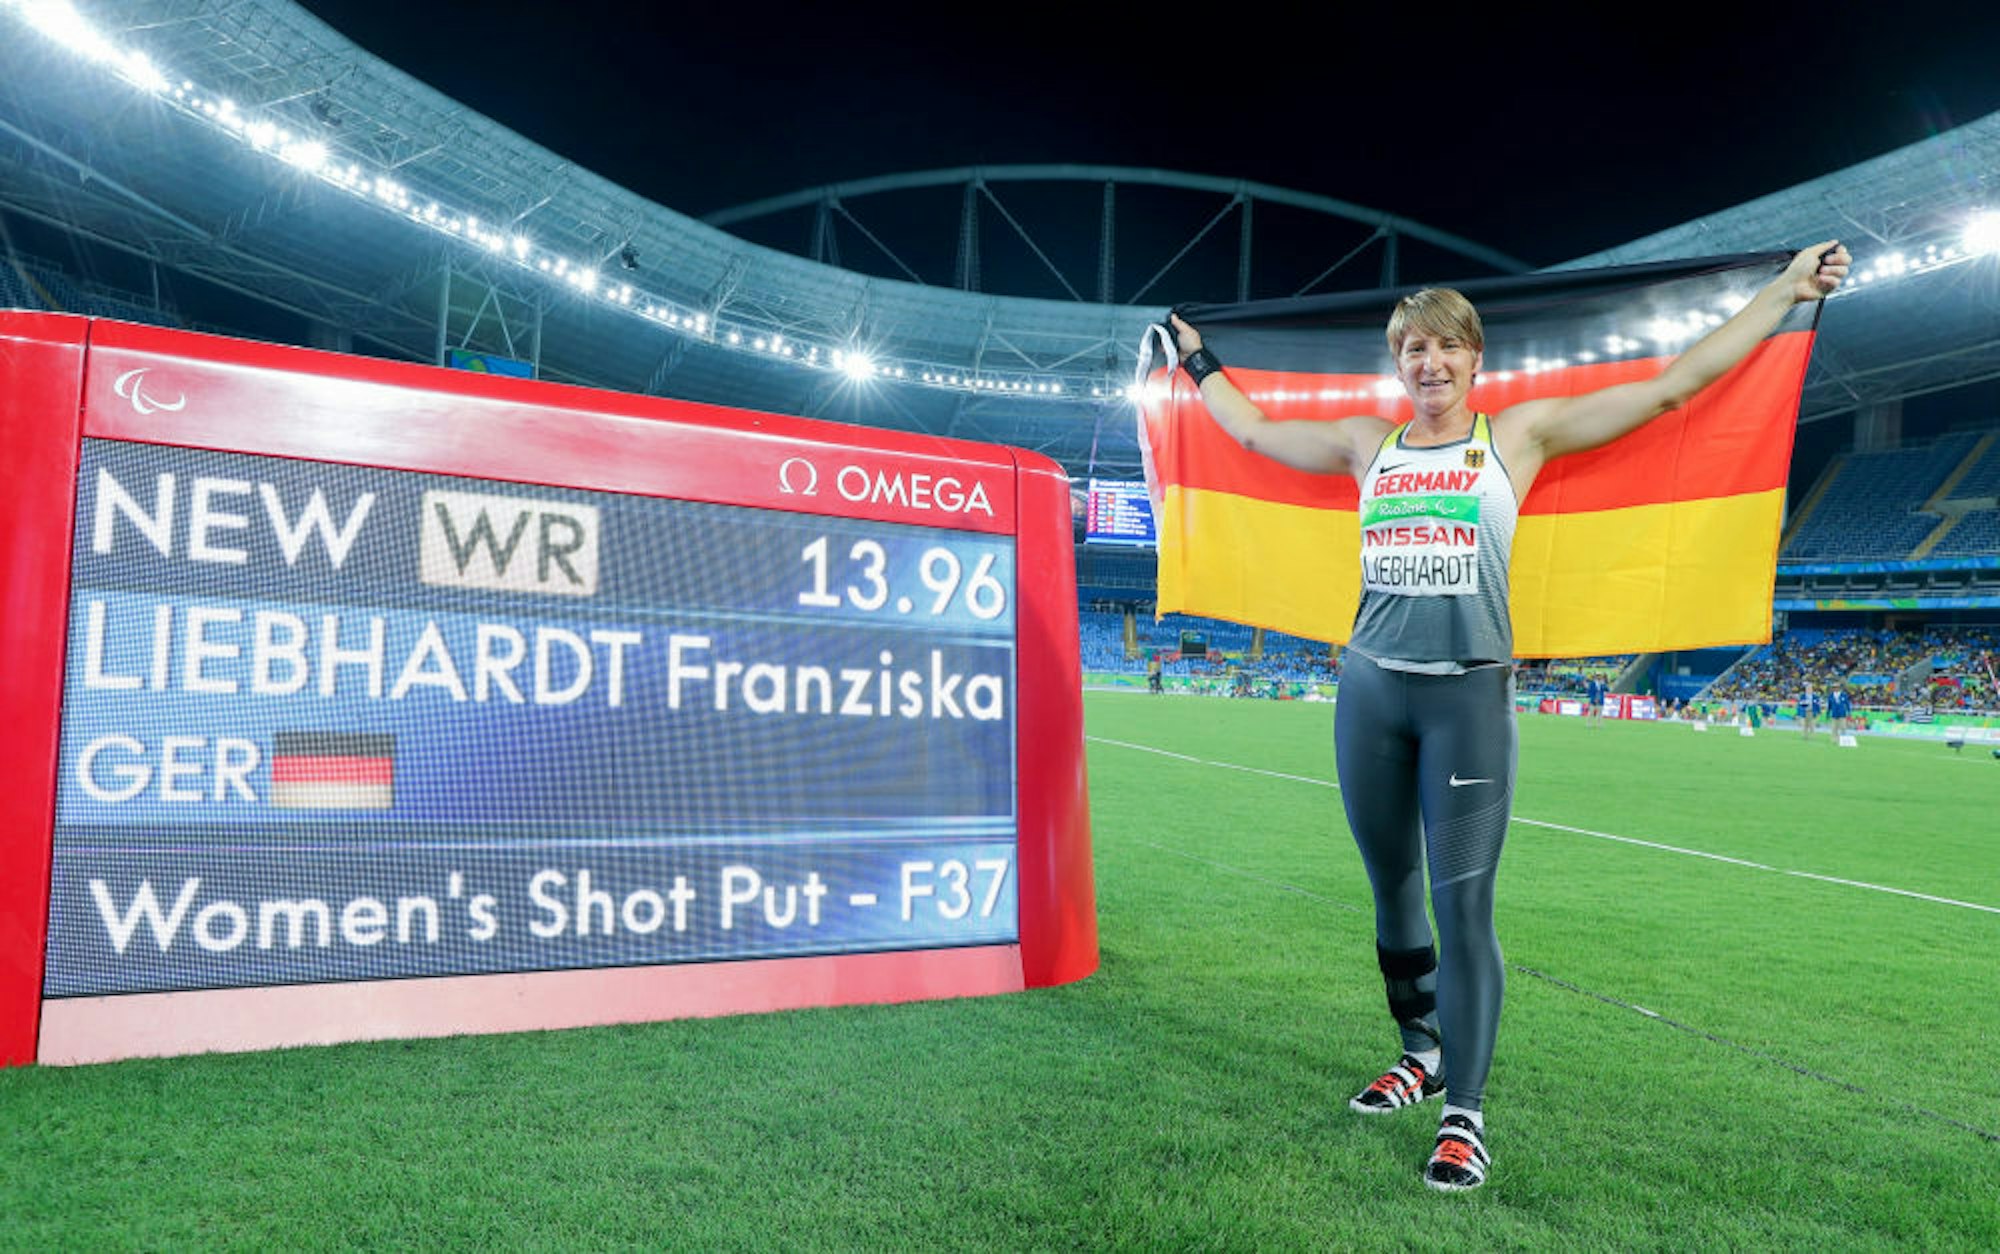 Weltrekord bei den Paralympics in Rio de Janeiro: Franziska Liebhardt am 13. September 2016 im Olympiastadion